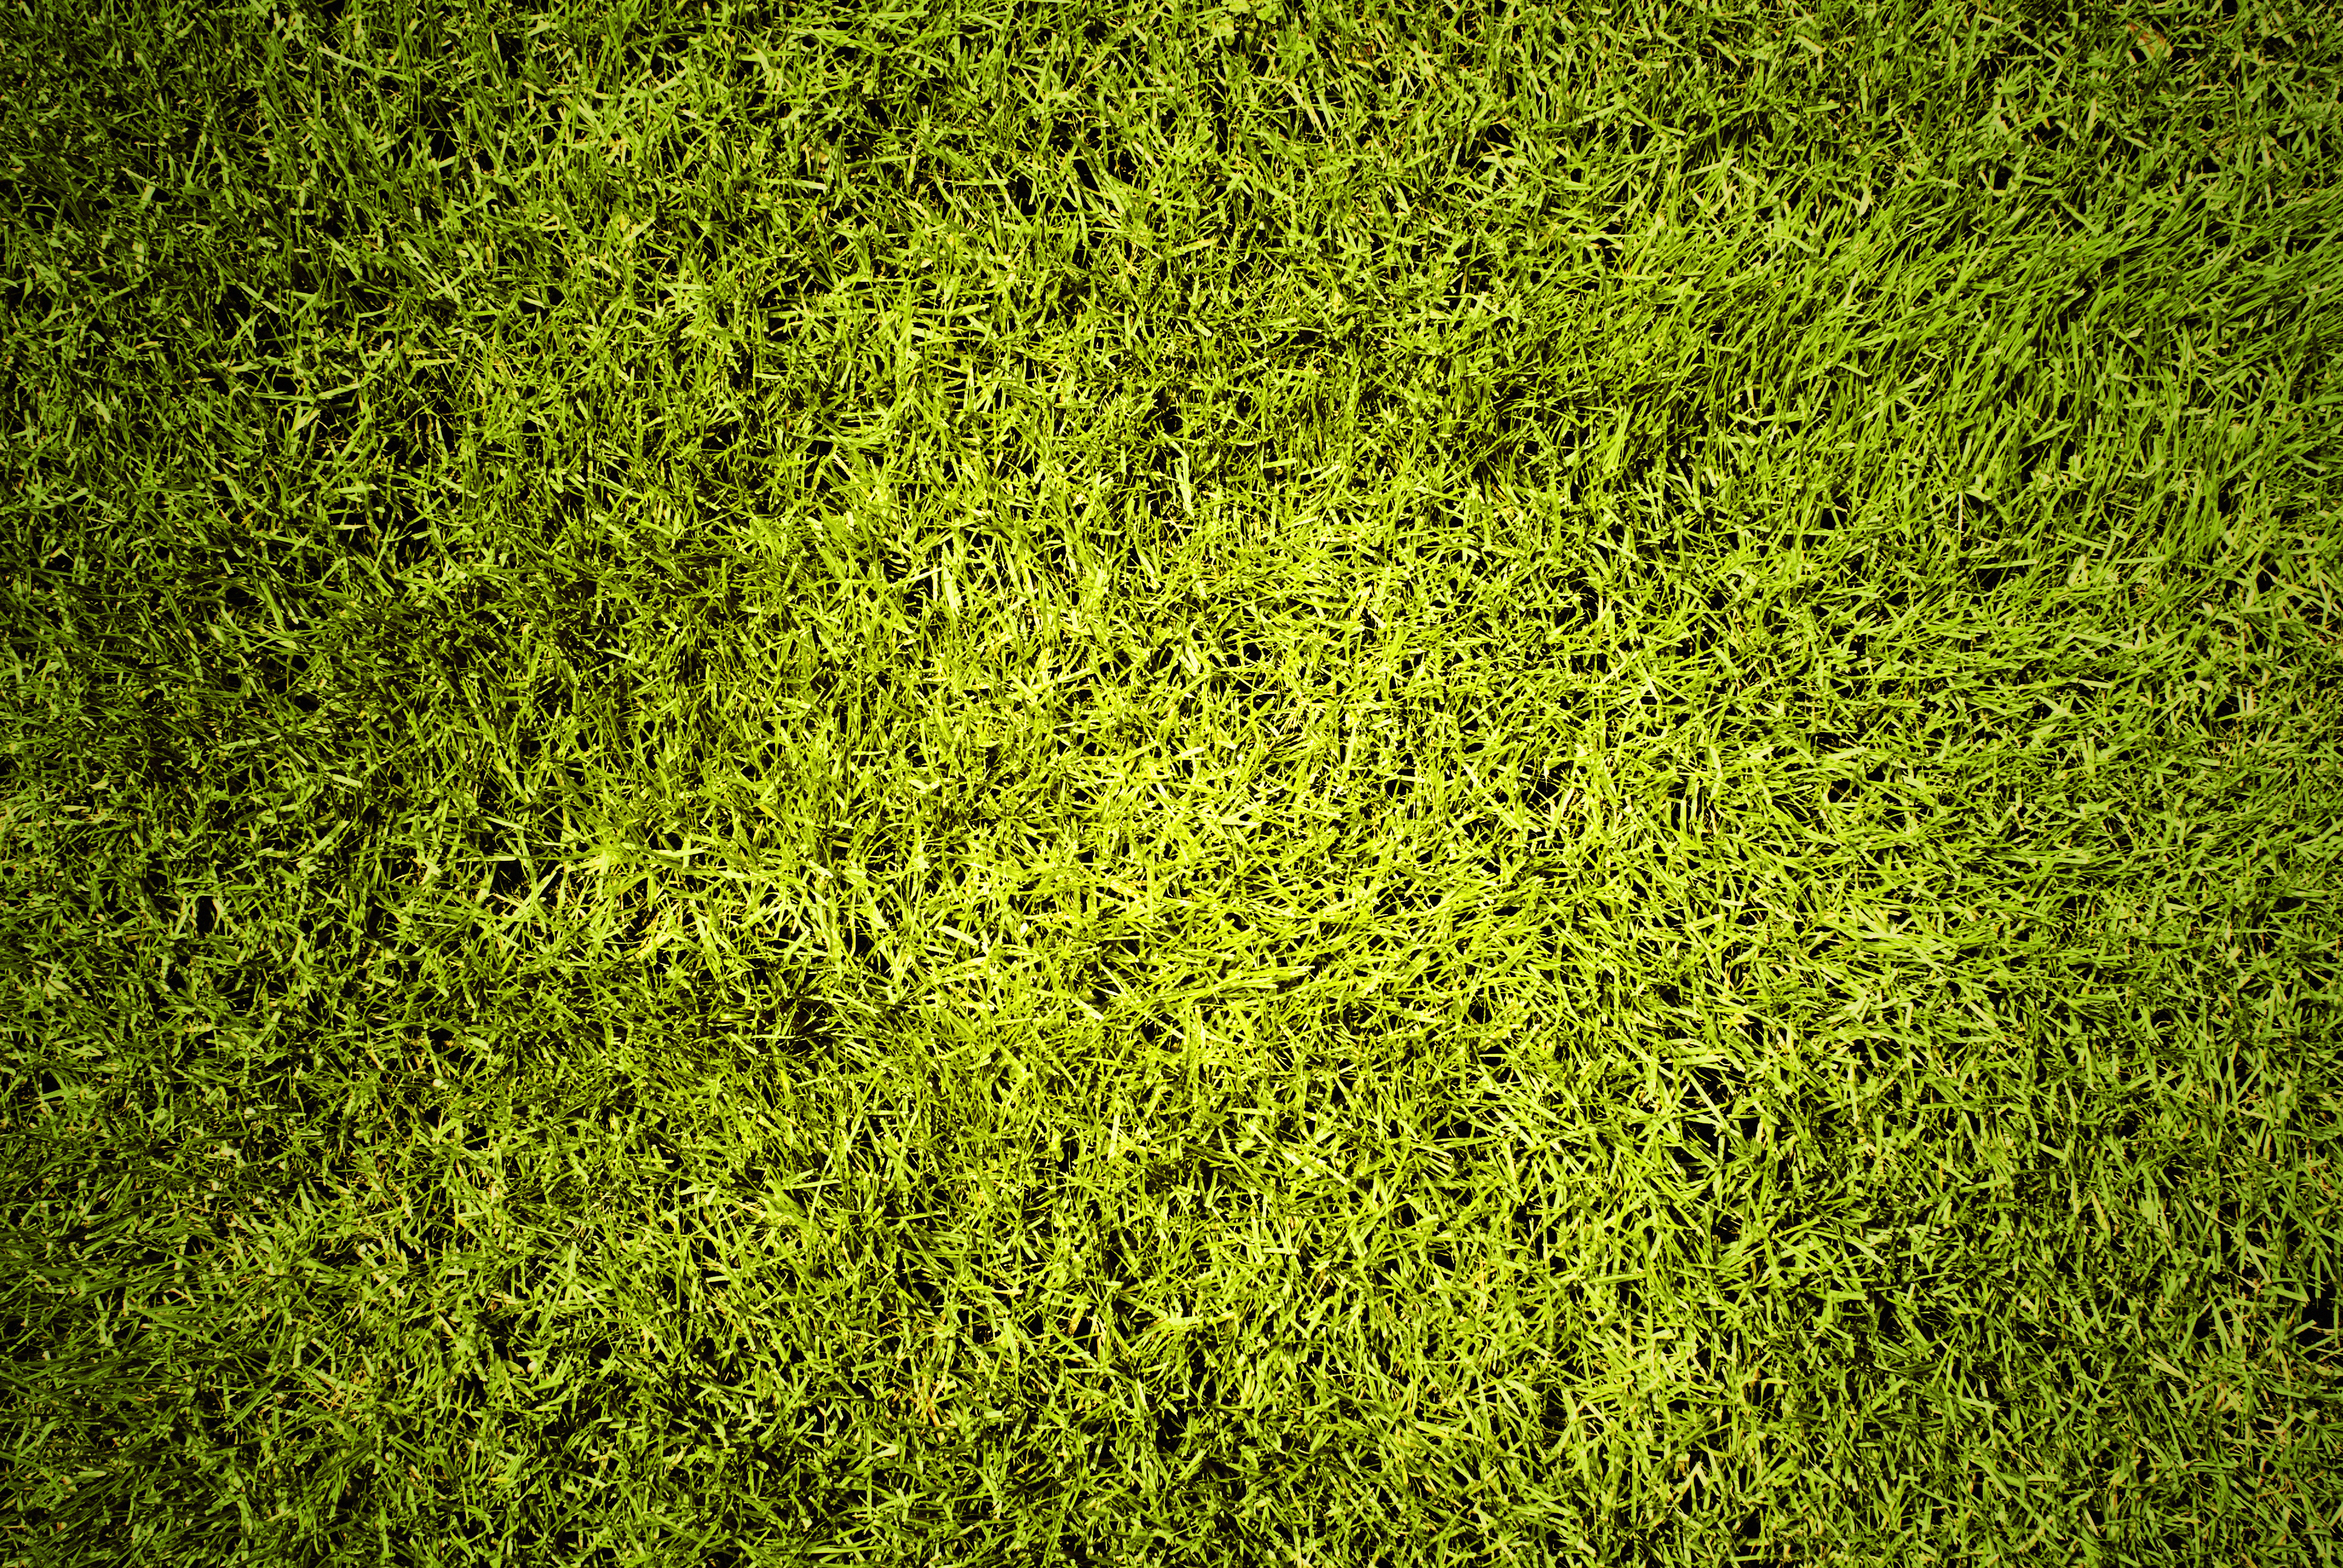 Lawn Grass Greenery Texture Green